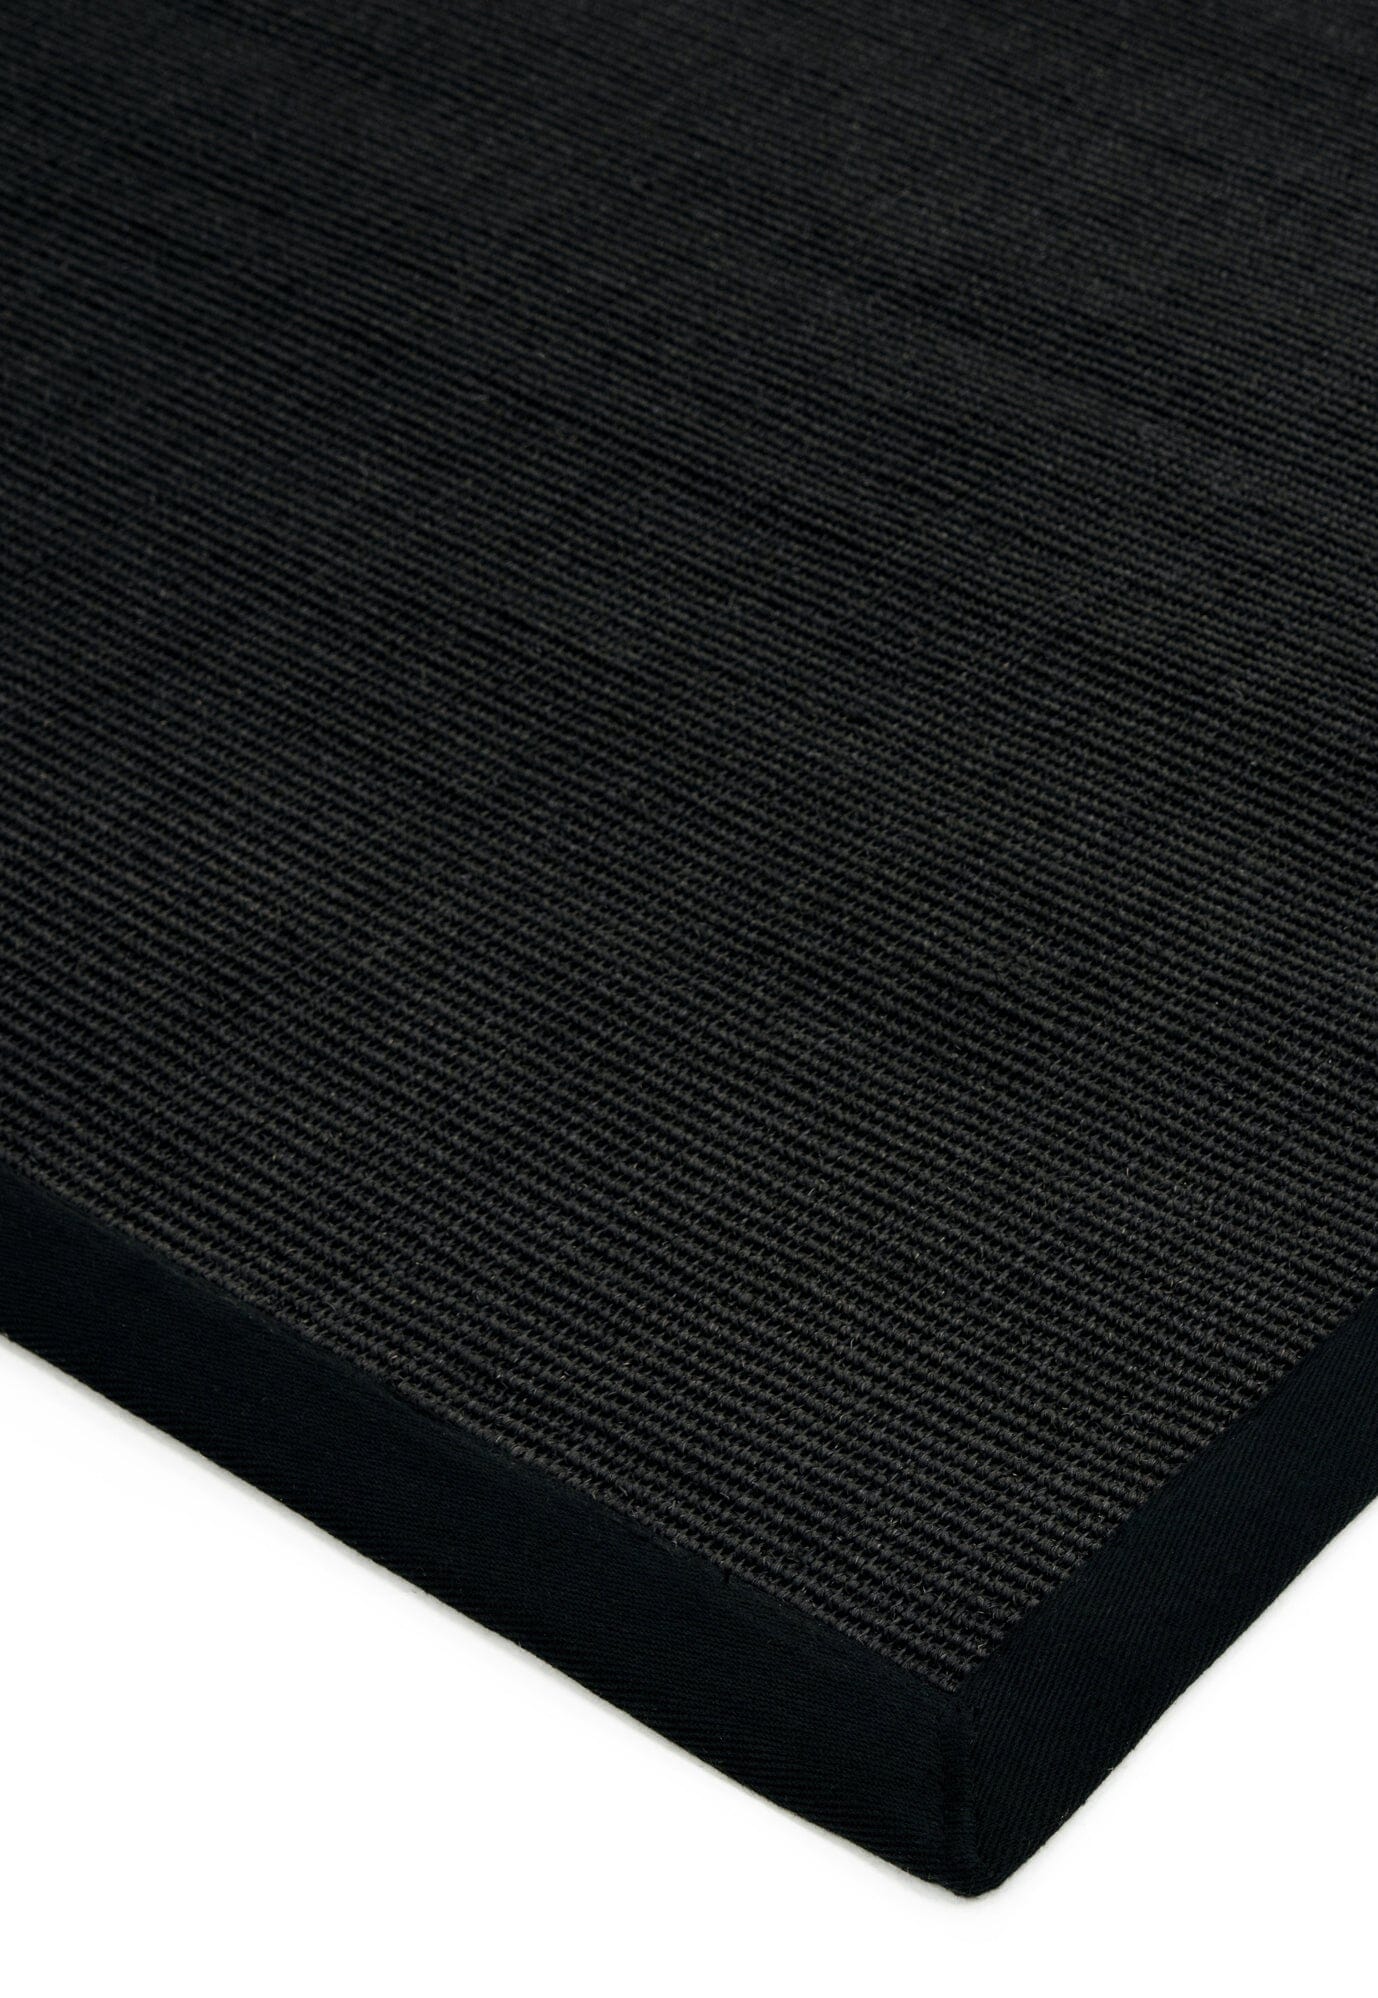  Asiatic Carpets-Asiatic Carpets Sisal Machine Woven Rug Black/Black - 68 x 300cm-Black 741 